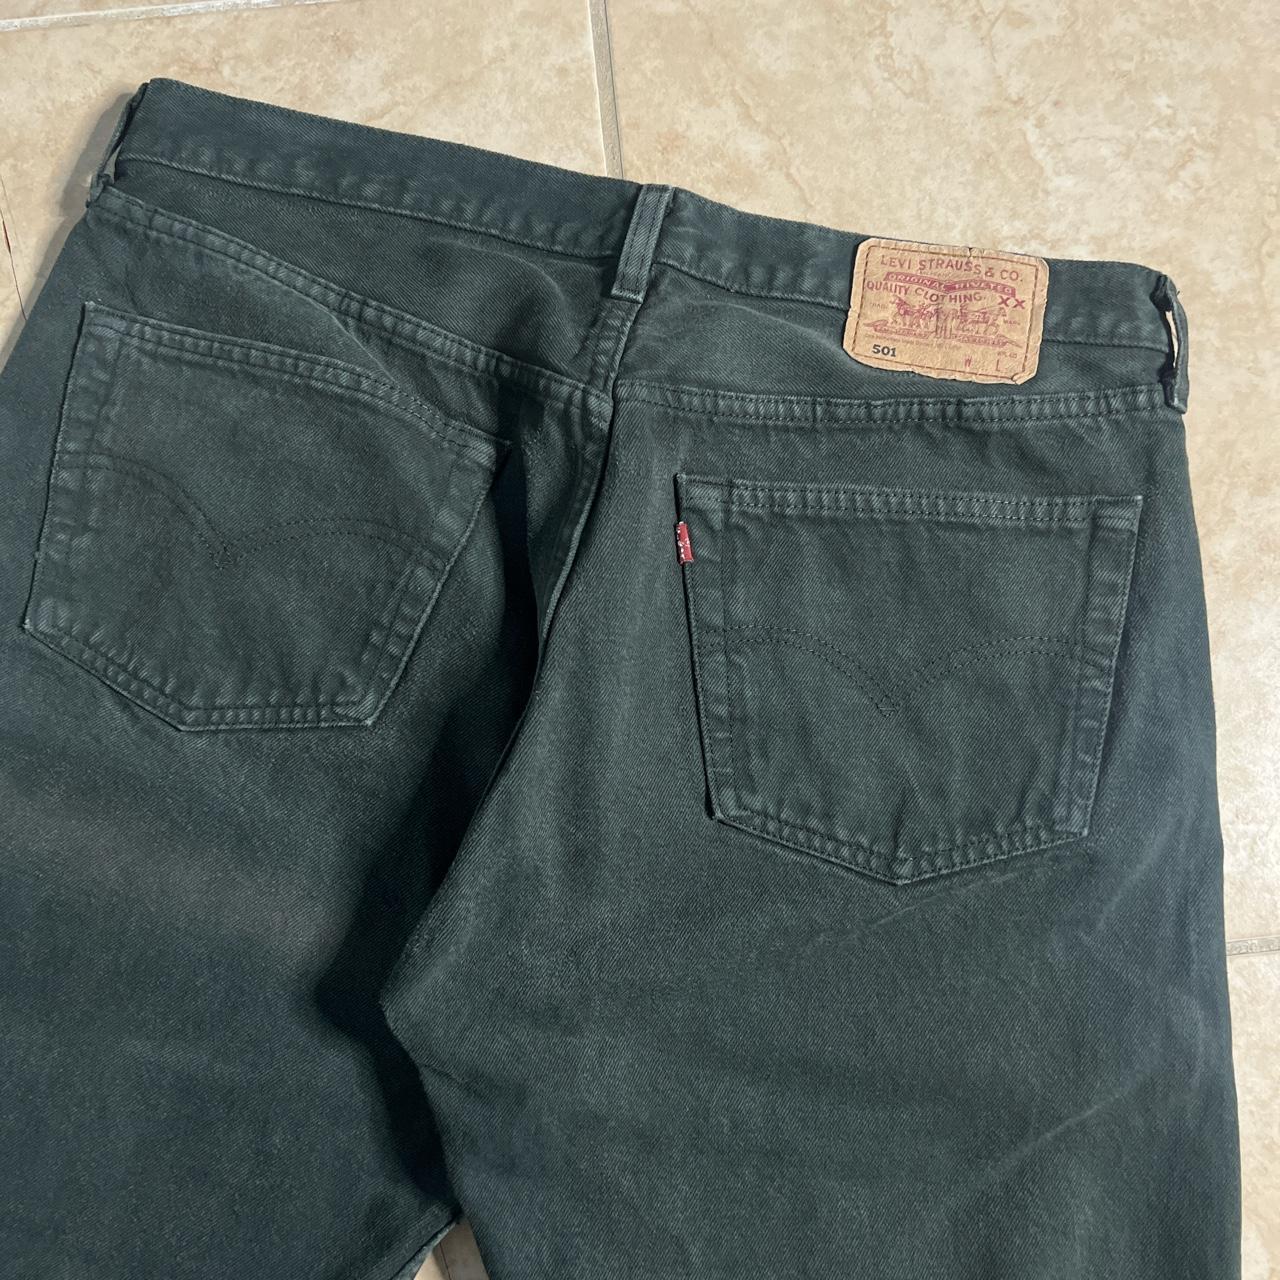 Vintage Charcoal Levis 501 Jeans Fits 36x29, see... - Depop